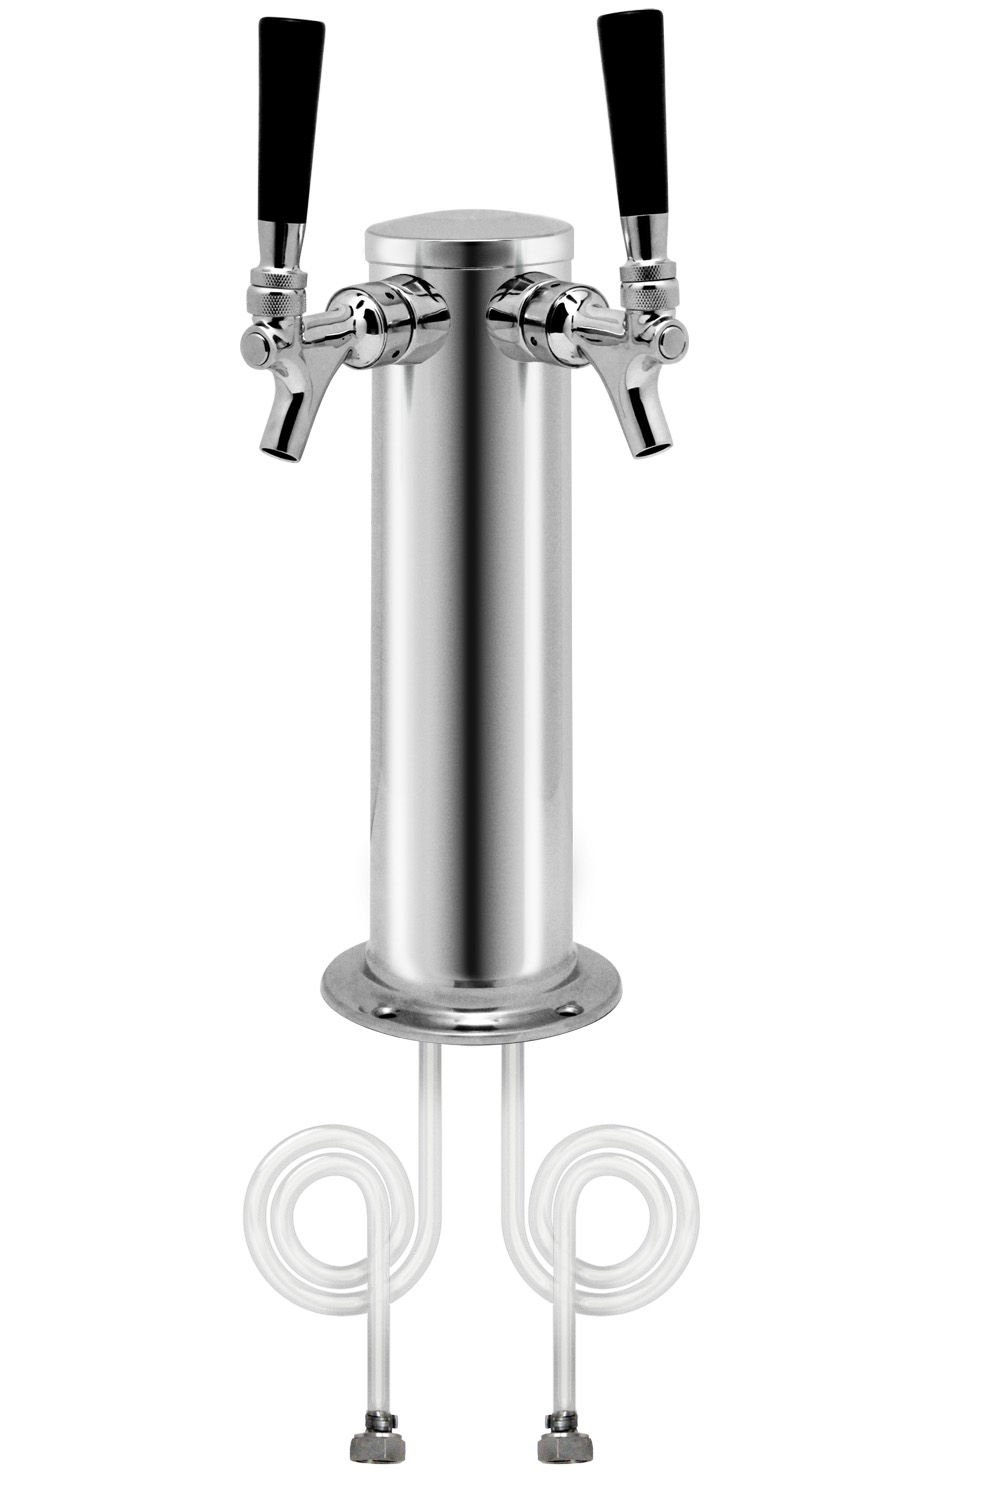 Single Tap Draft Beer Kegerator Tower 100% Stainless Steel Home Bar Faucet 